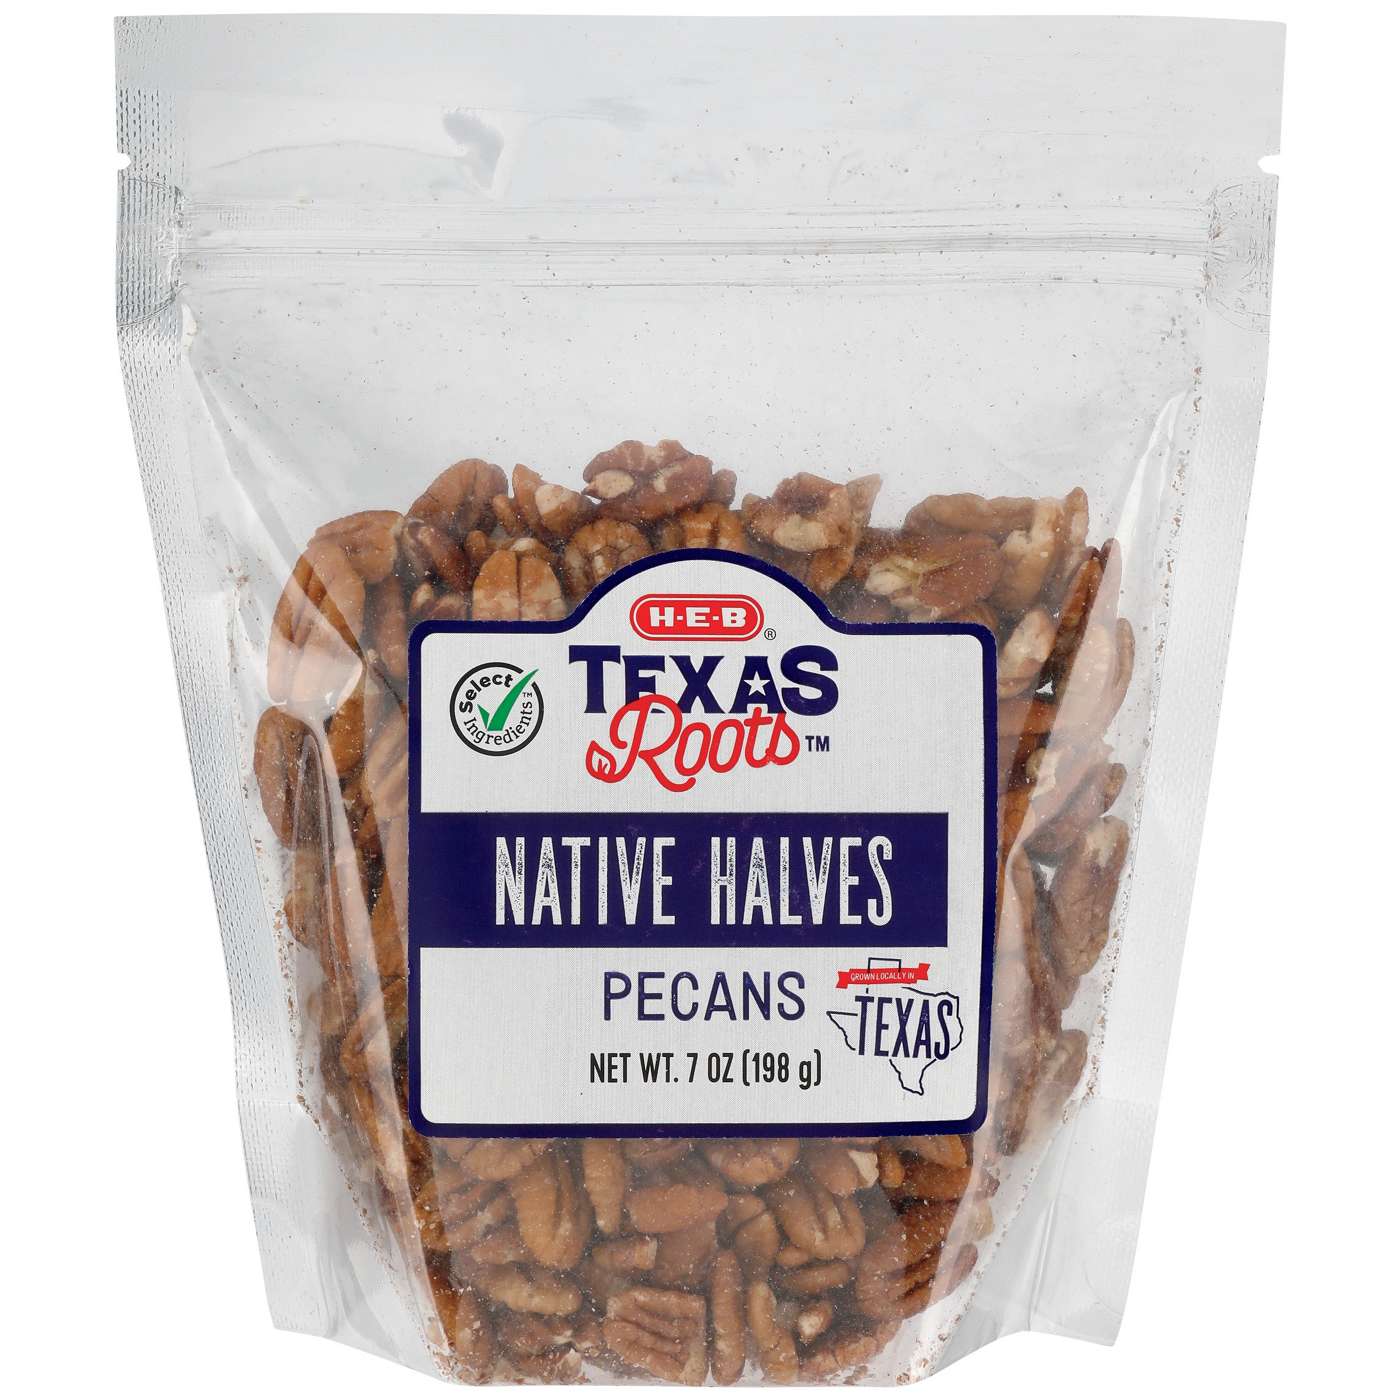 H-E-B Texas Roots Native Pecan Halves; image 1 of 2